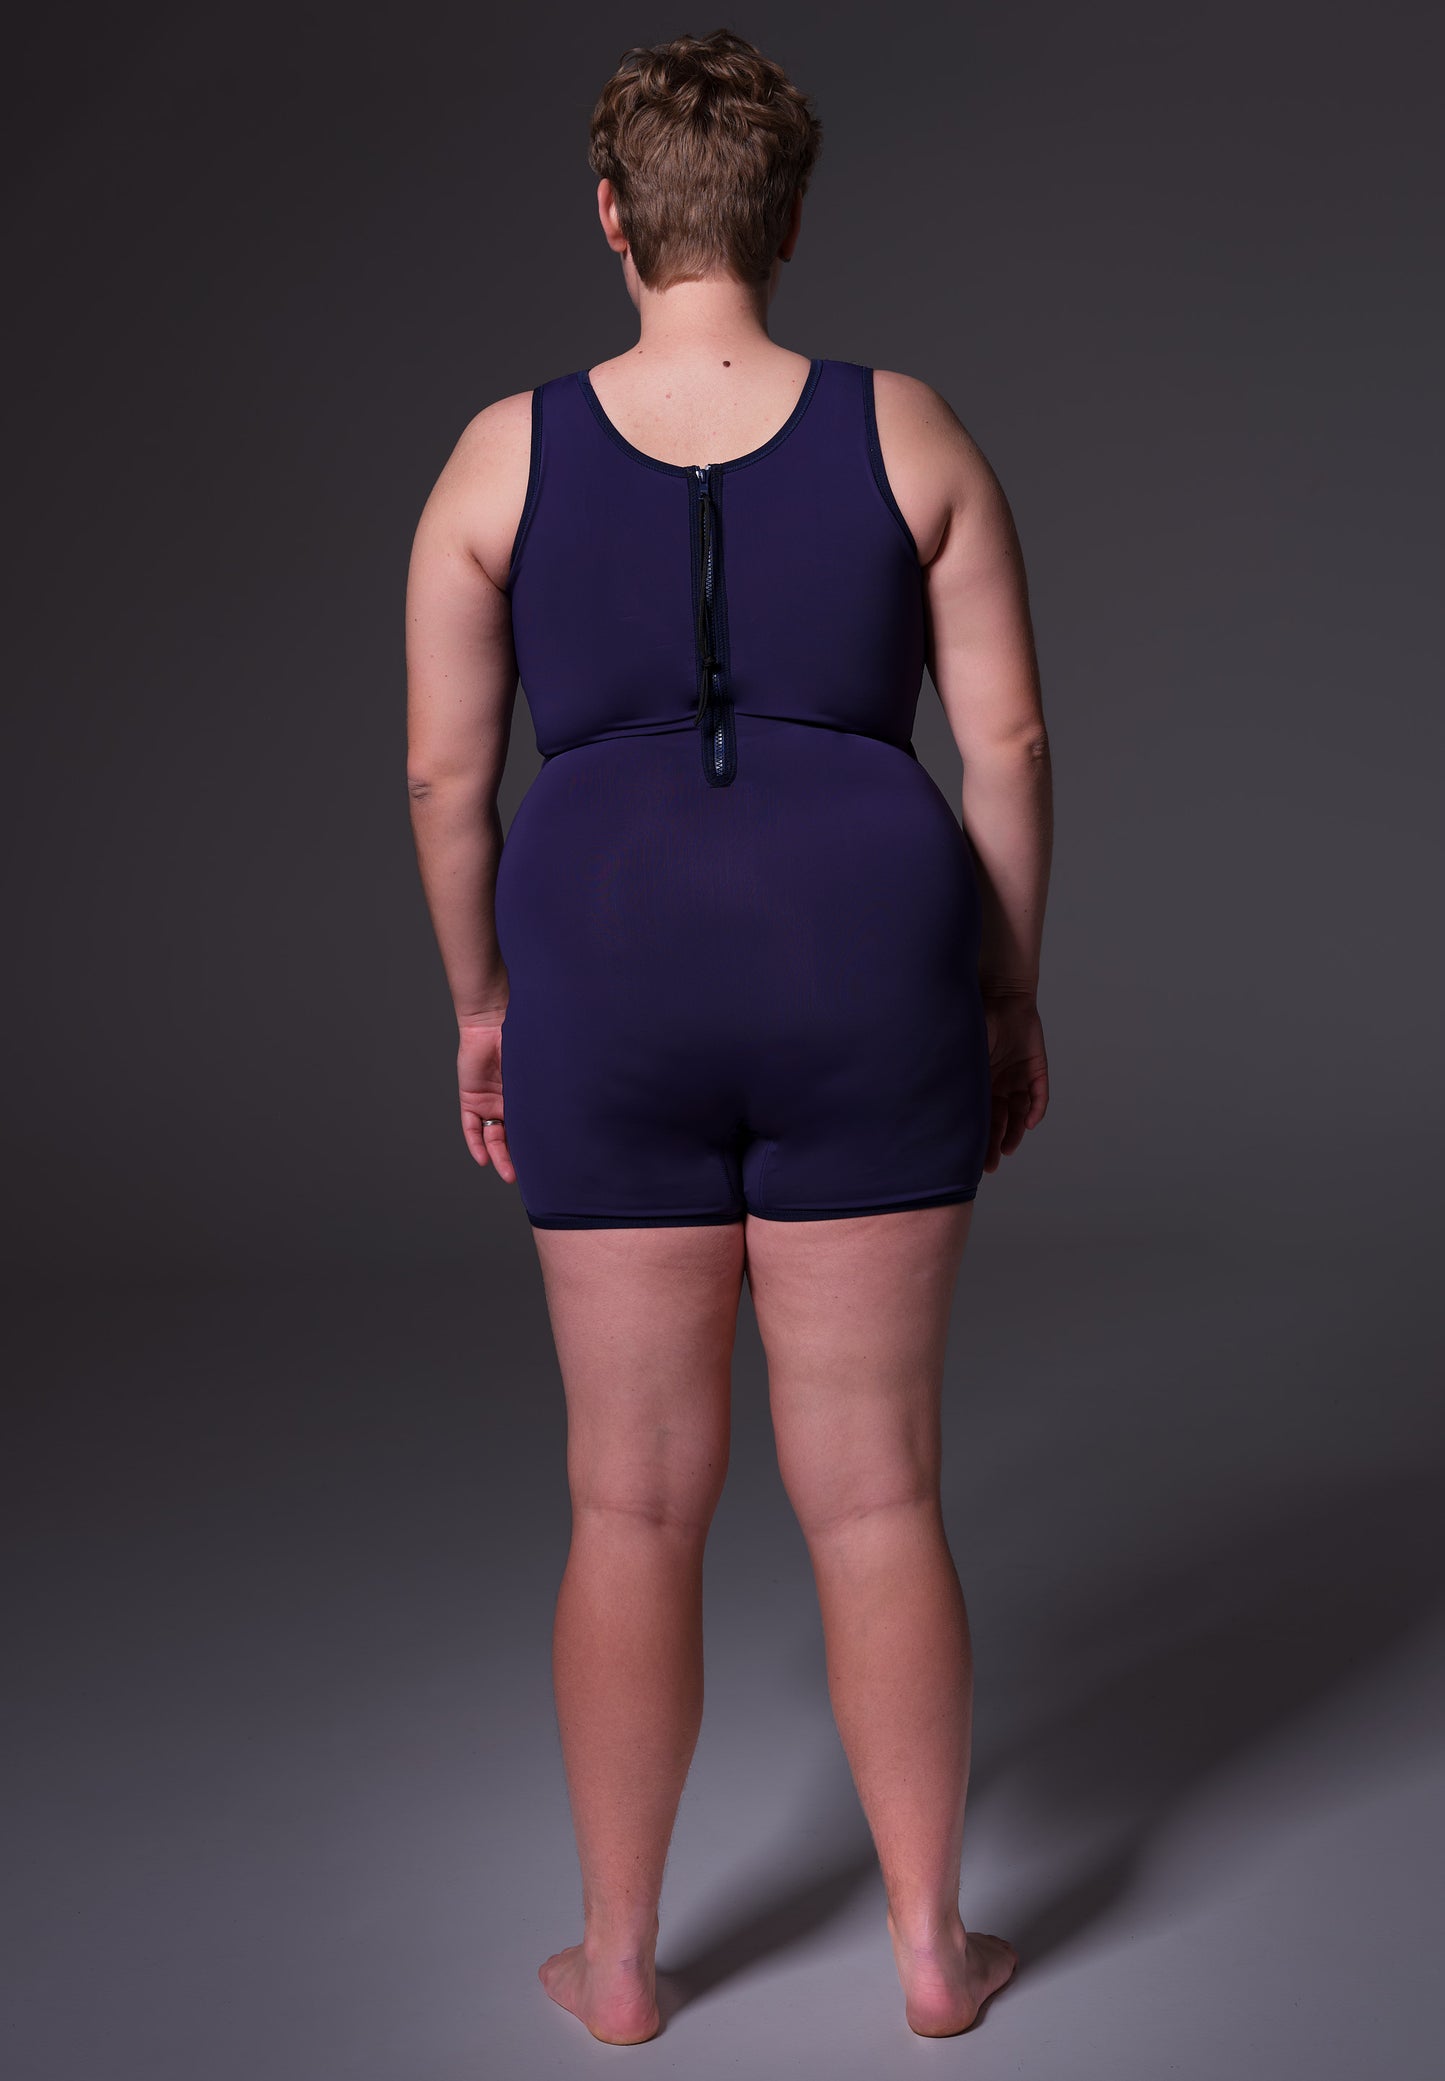 Swimsuit Binder dark blue, back view, modeled by Deven